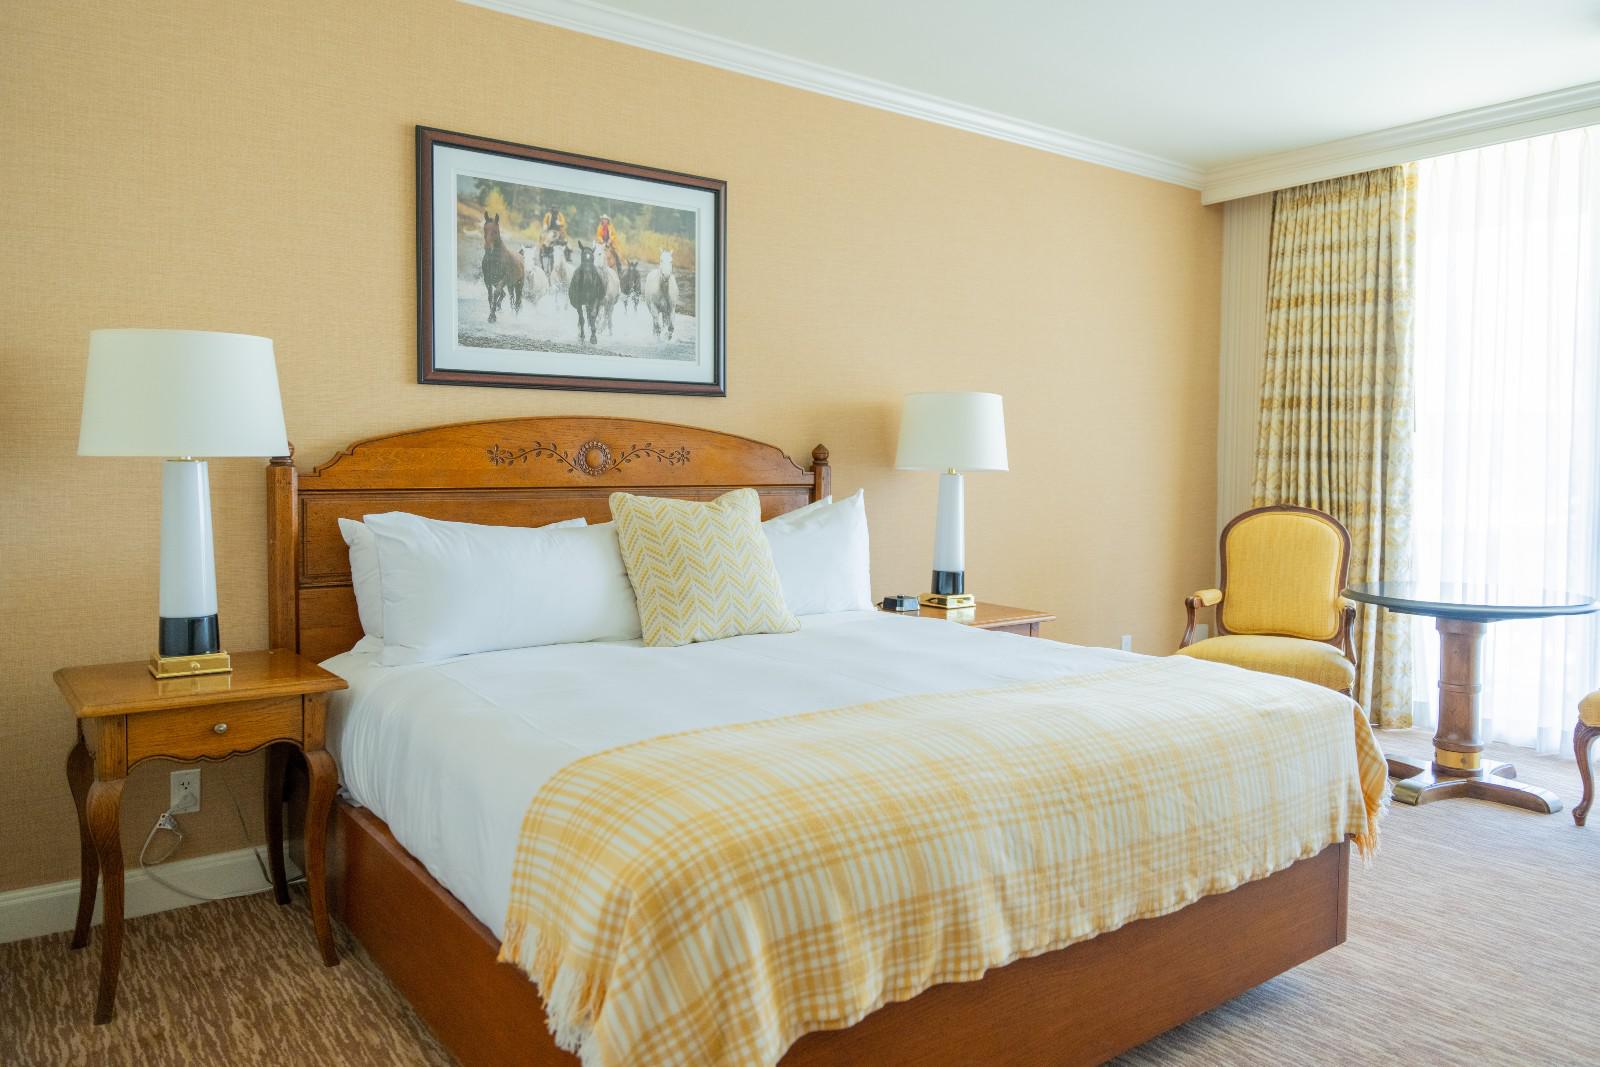 Little America Cheyenne Hotel & Resort Deluxe King room. Little America Hotel & Resort - Cheyenne Cheyenne (307)775-8400